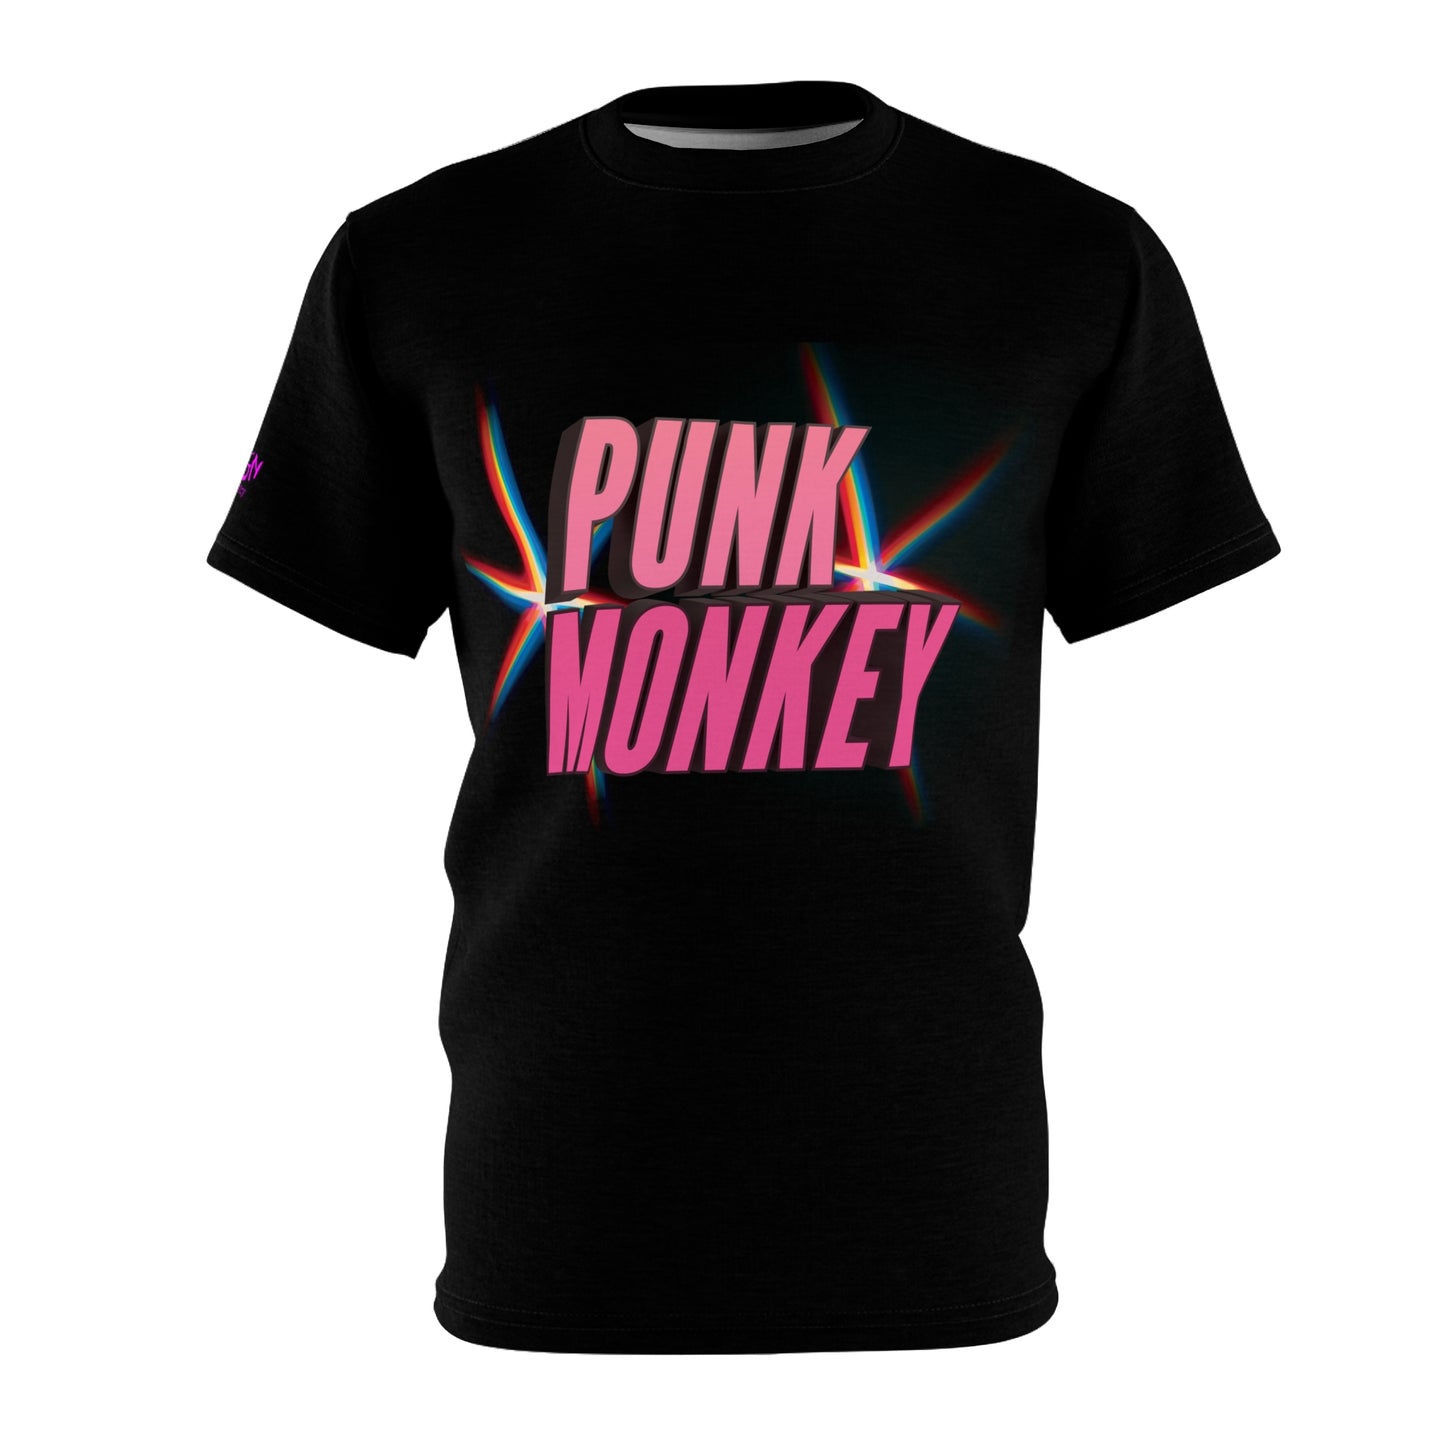 Punk Monkey "Star"